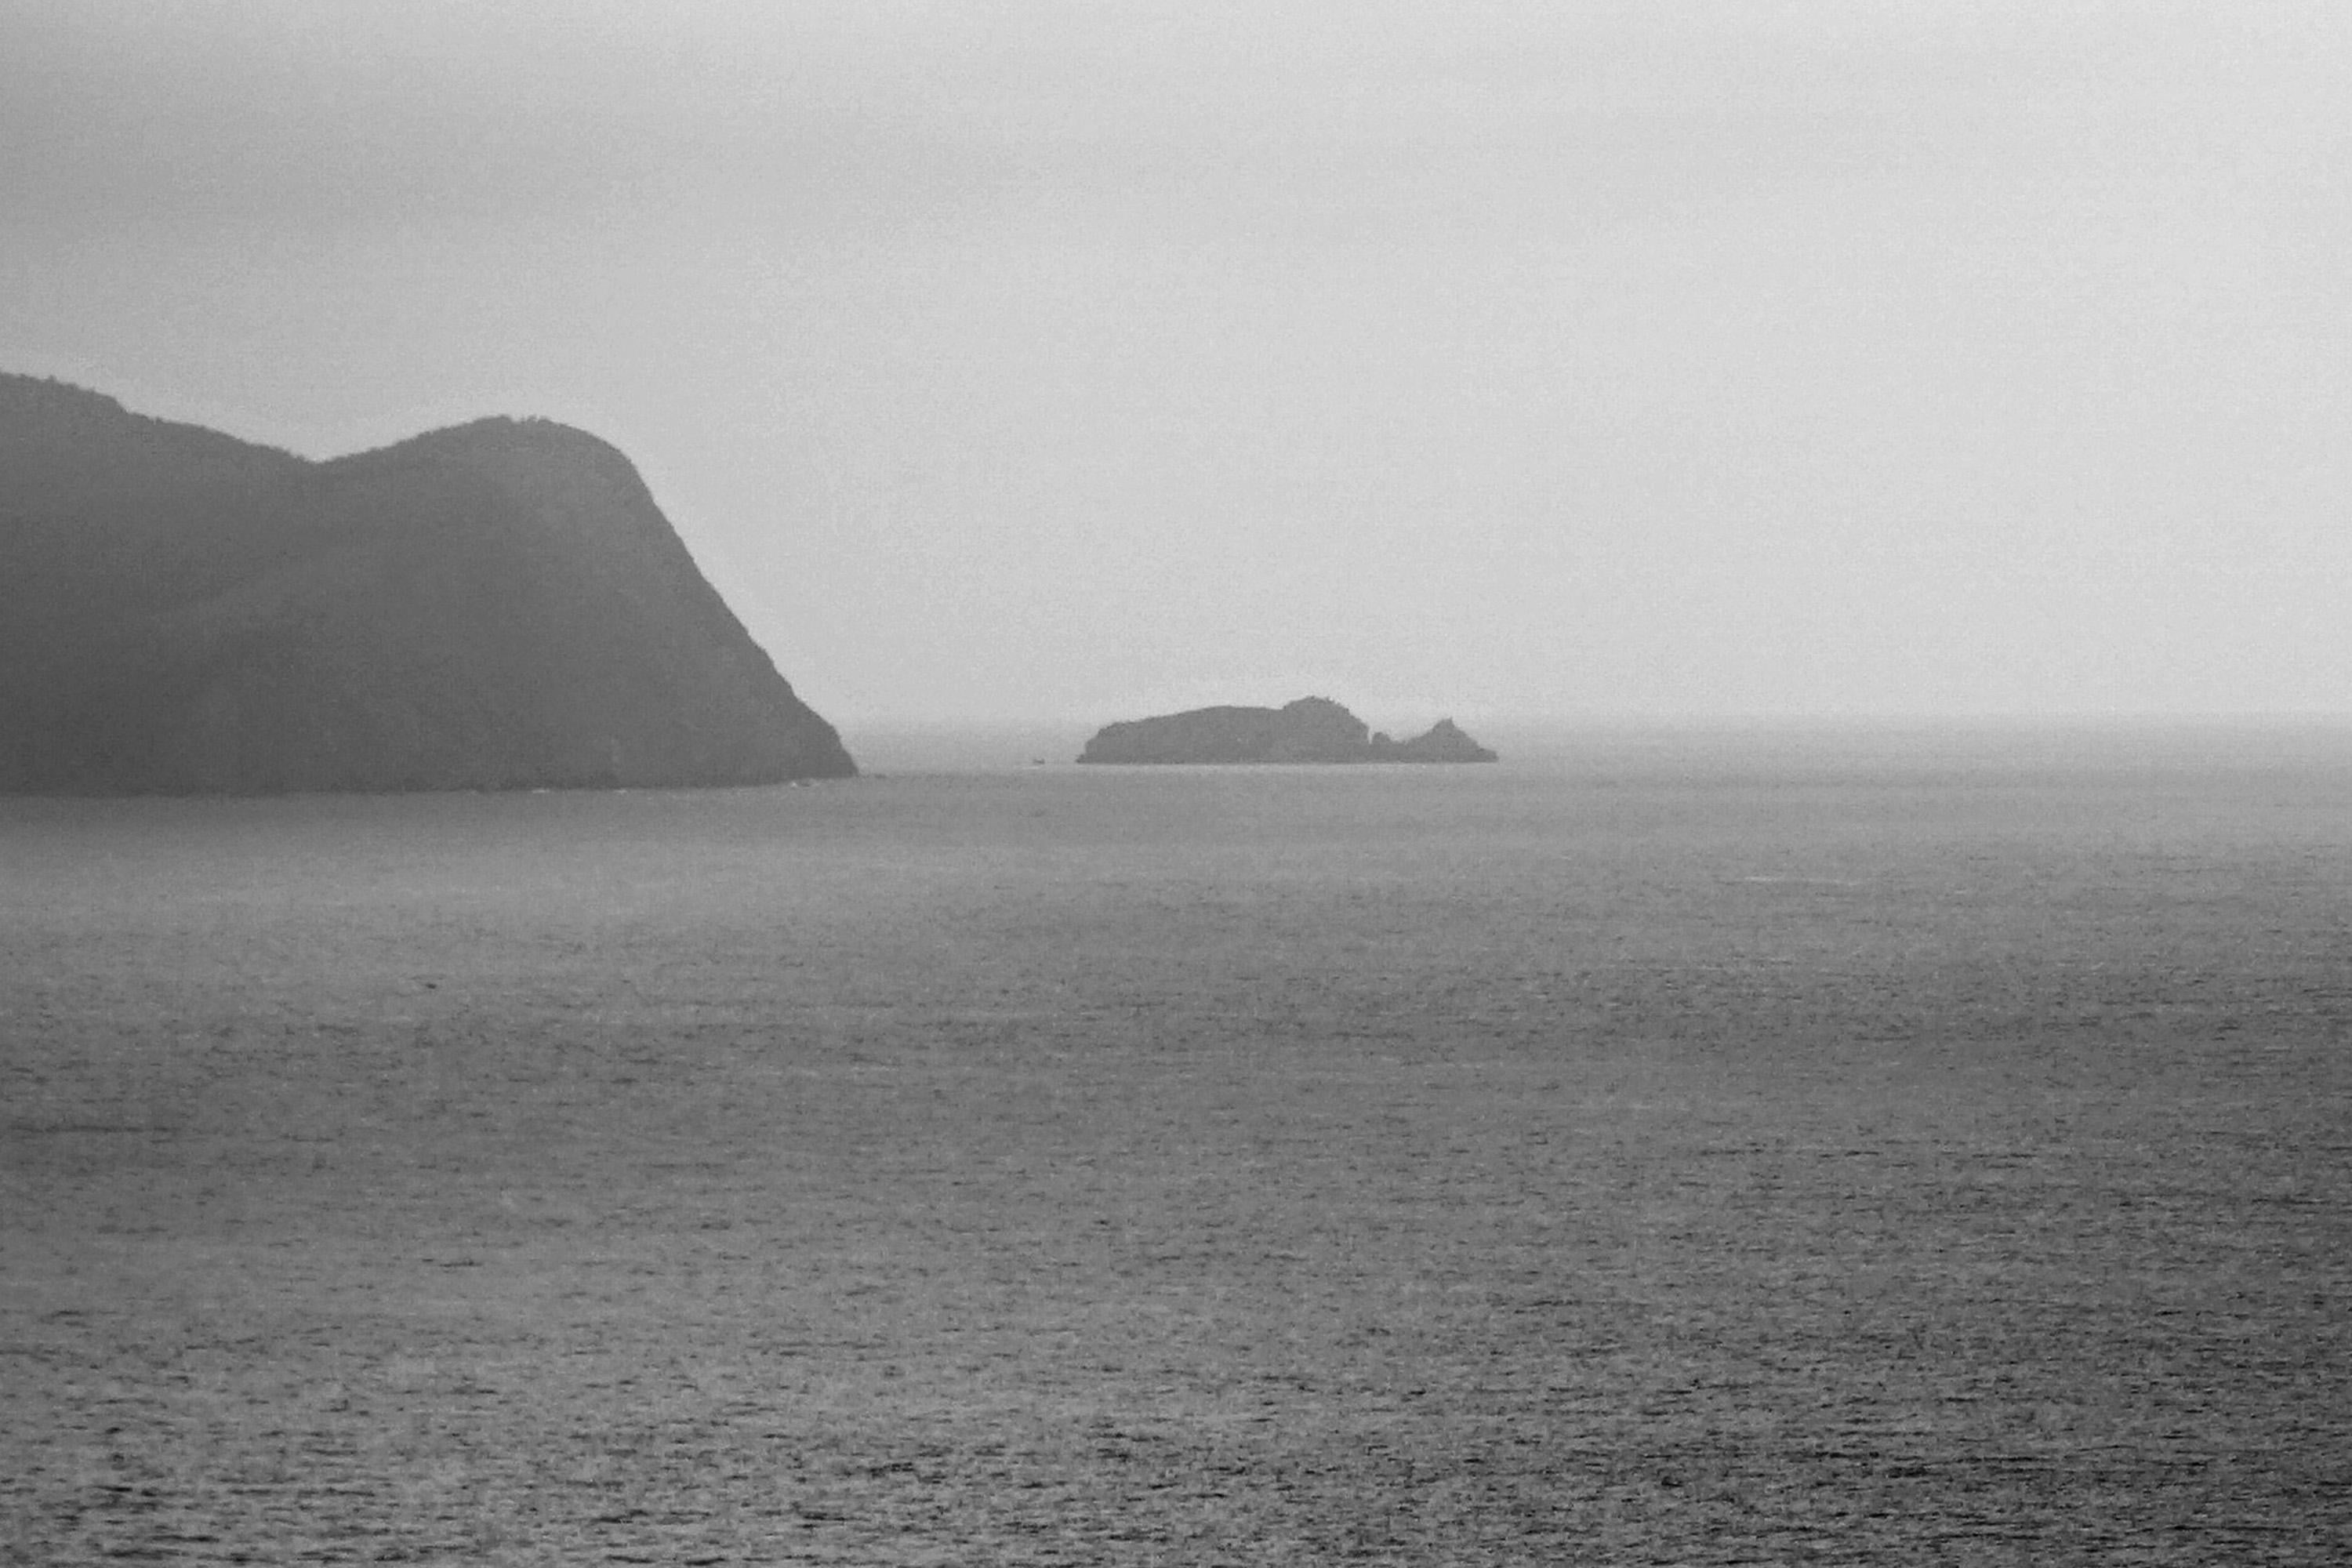  Black and White Misty Sailboat Journey, Regatta Seascape, Mediterranean Coast - Realist Photograph by Kind of Cyan